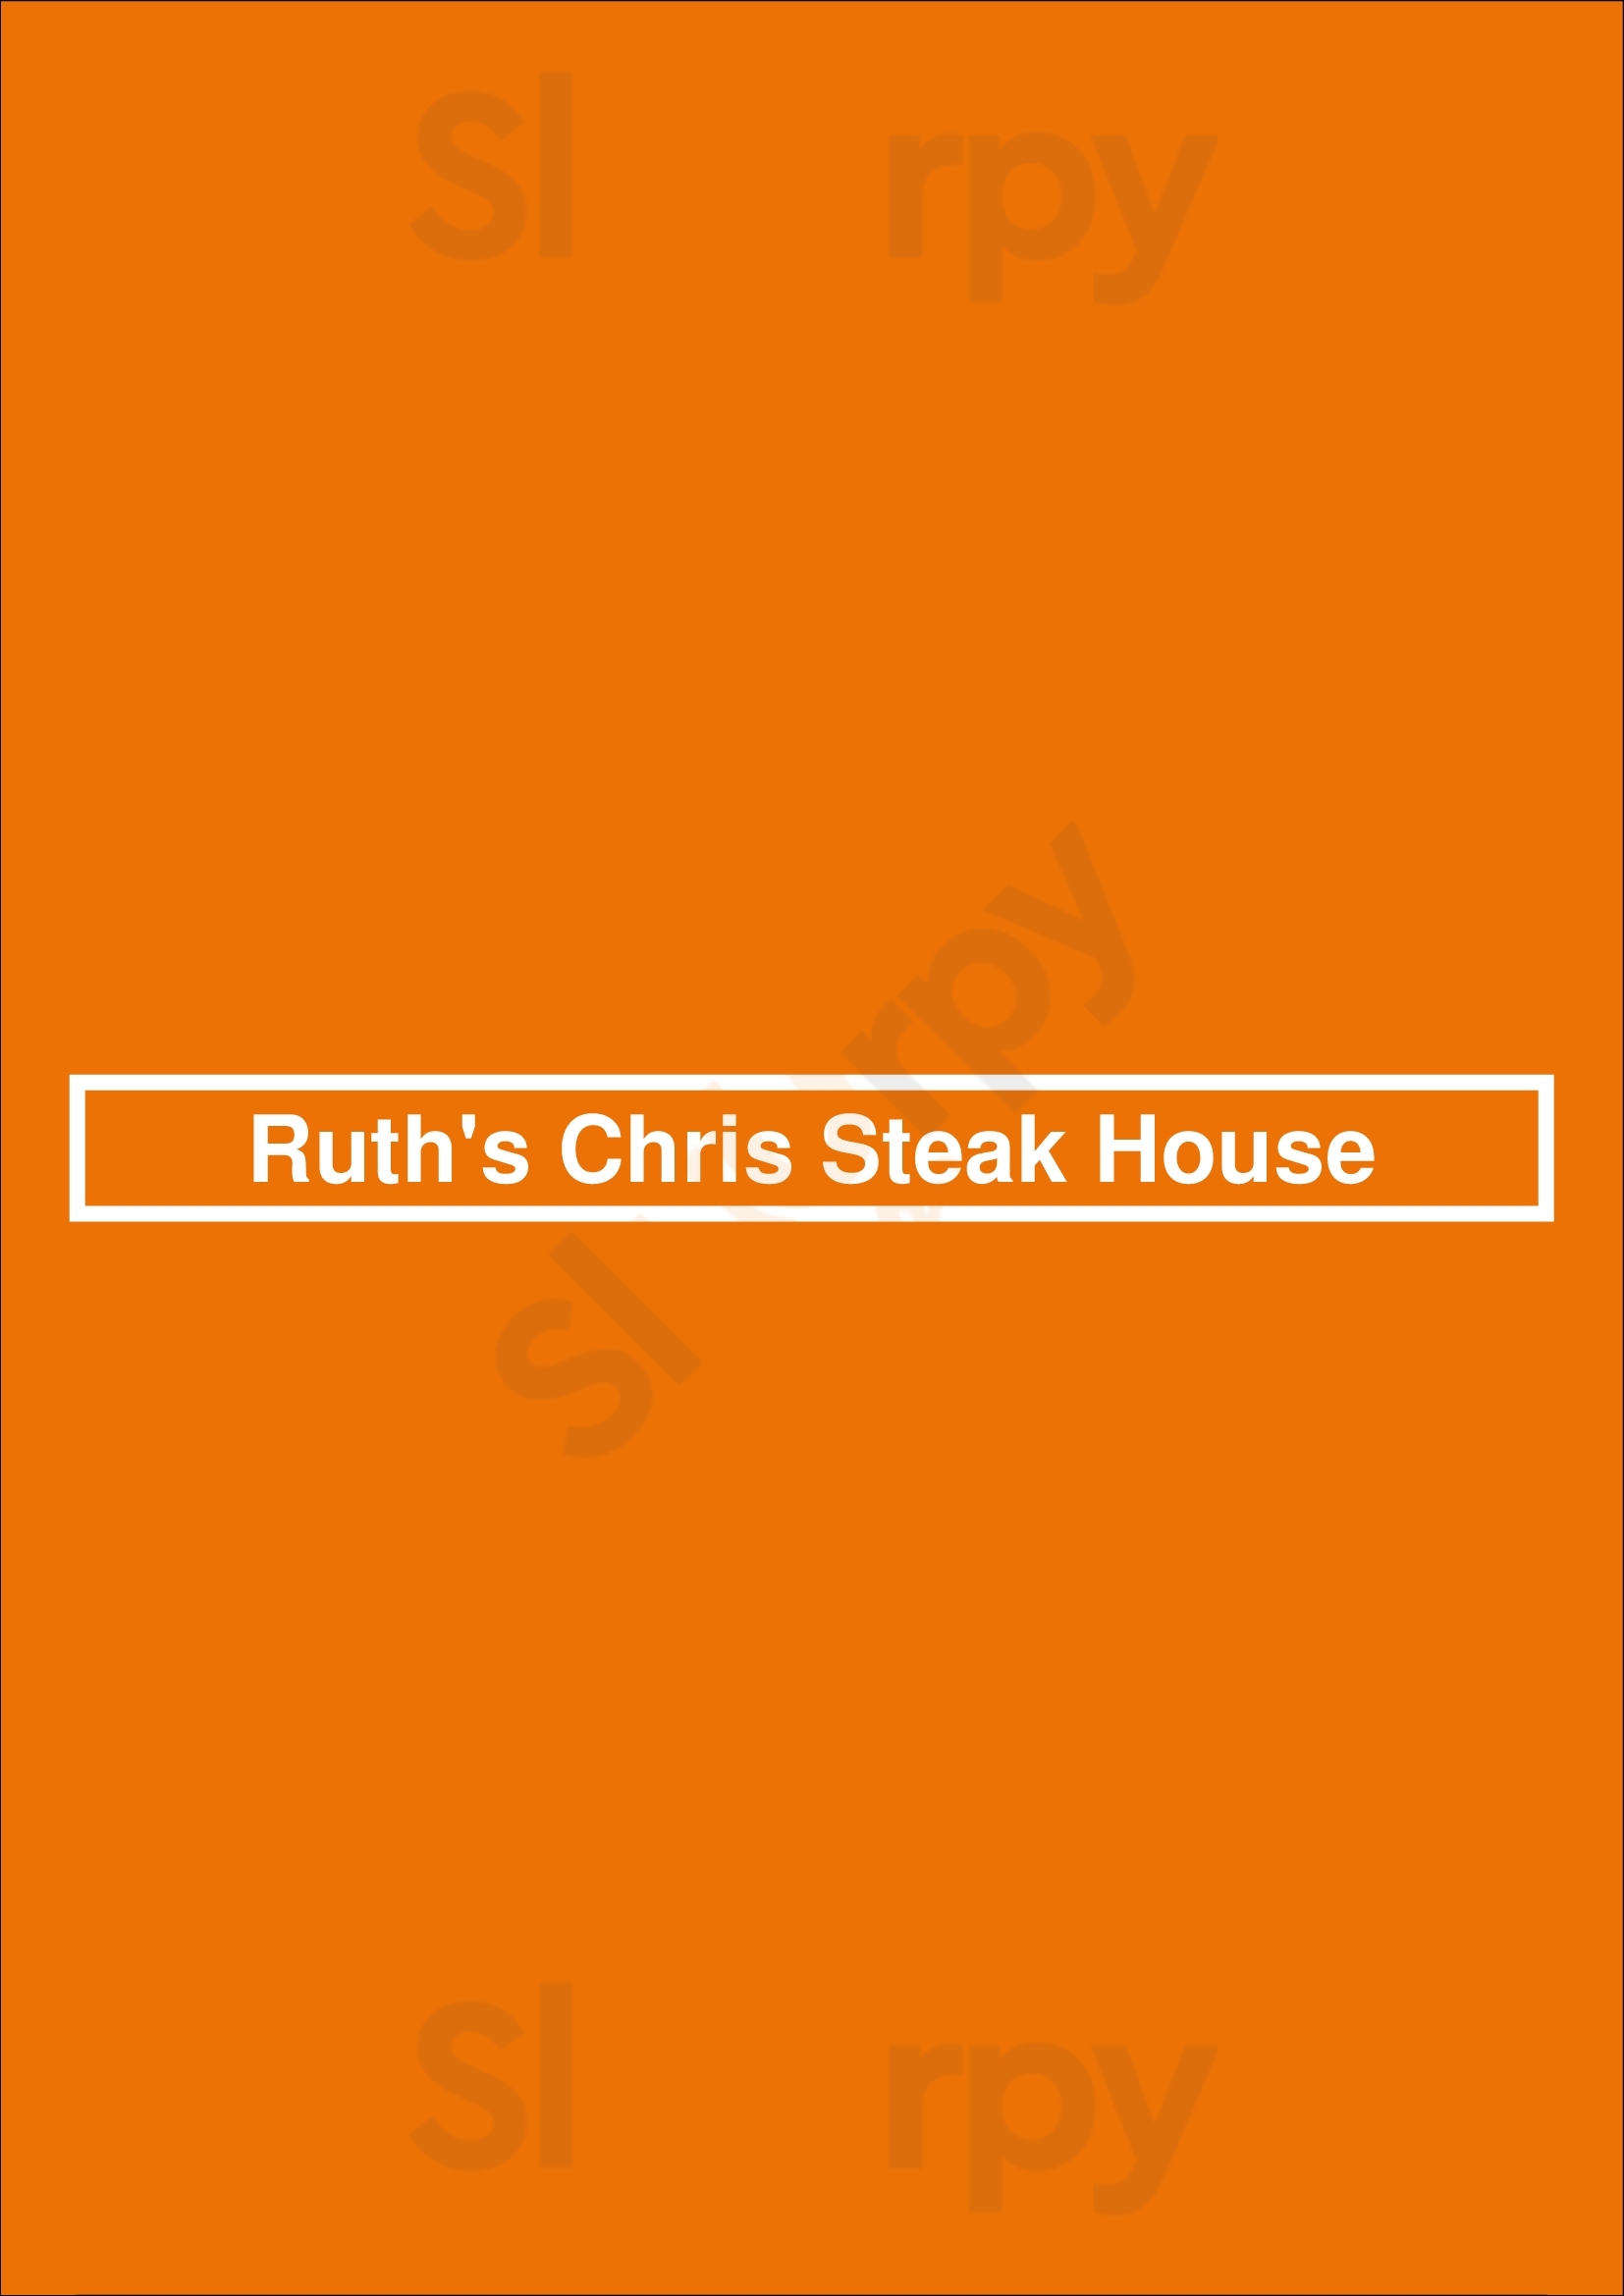 Ruth's Chris Steak House Chicago Menu - 1